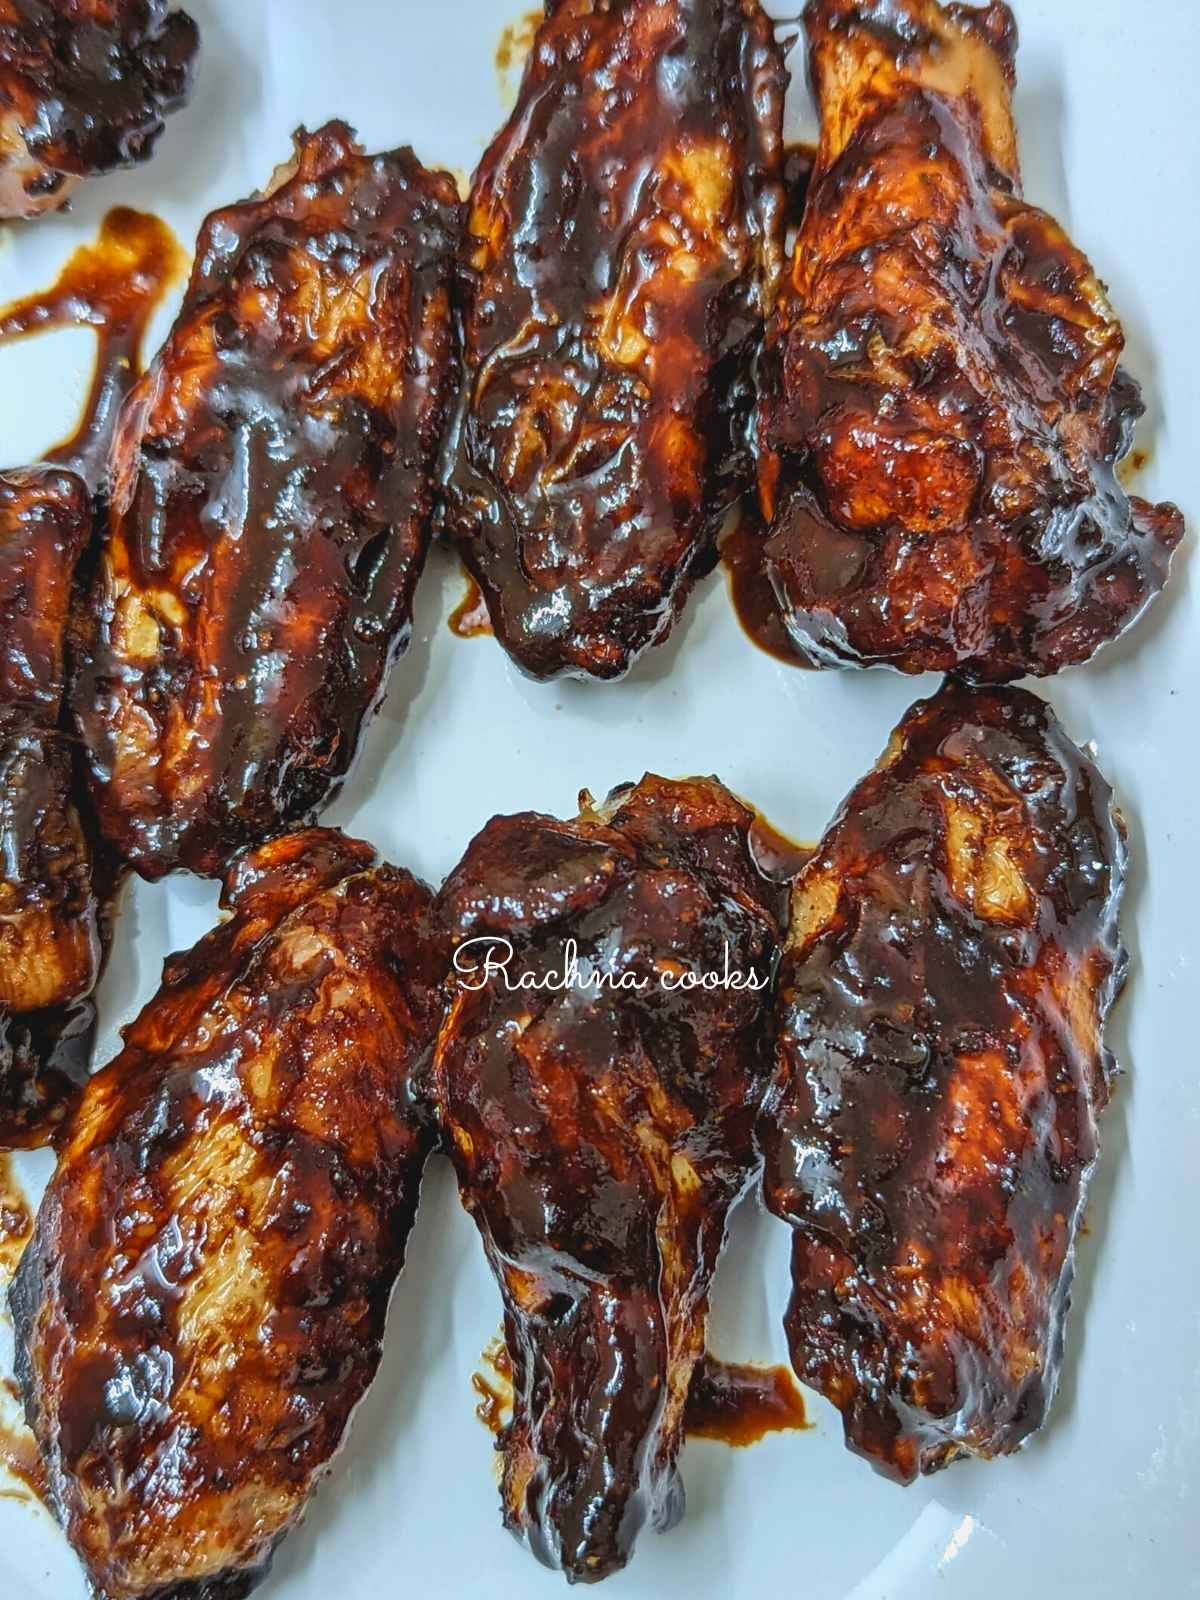 Korean chicken wings served on a white platter